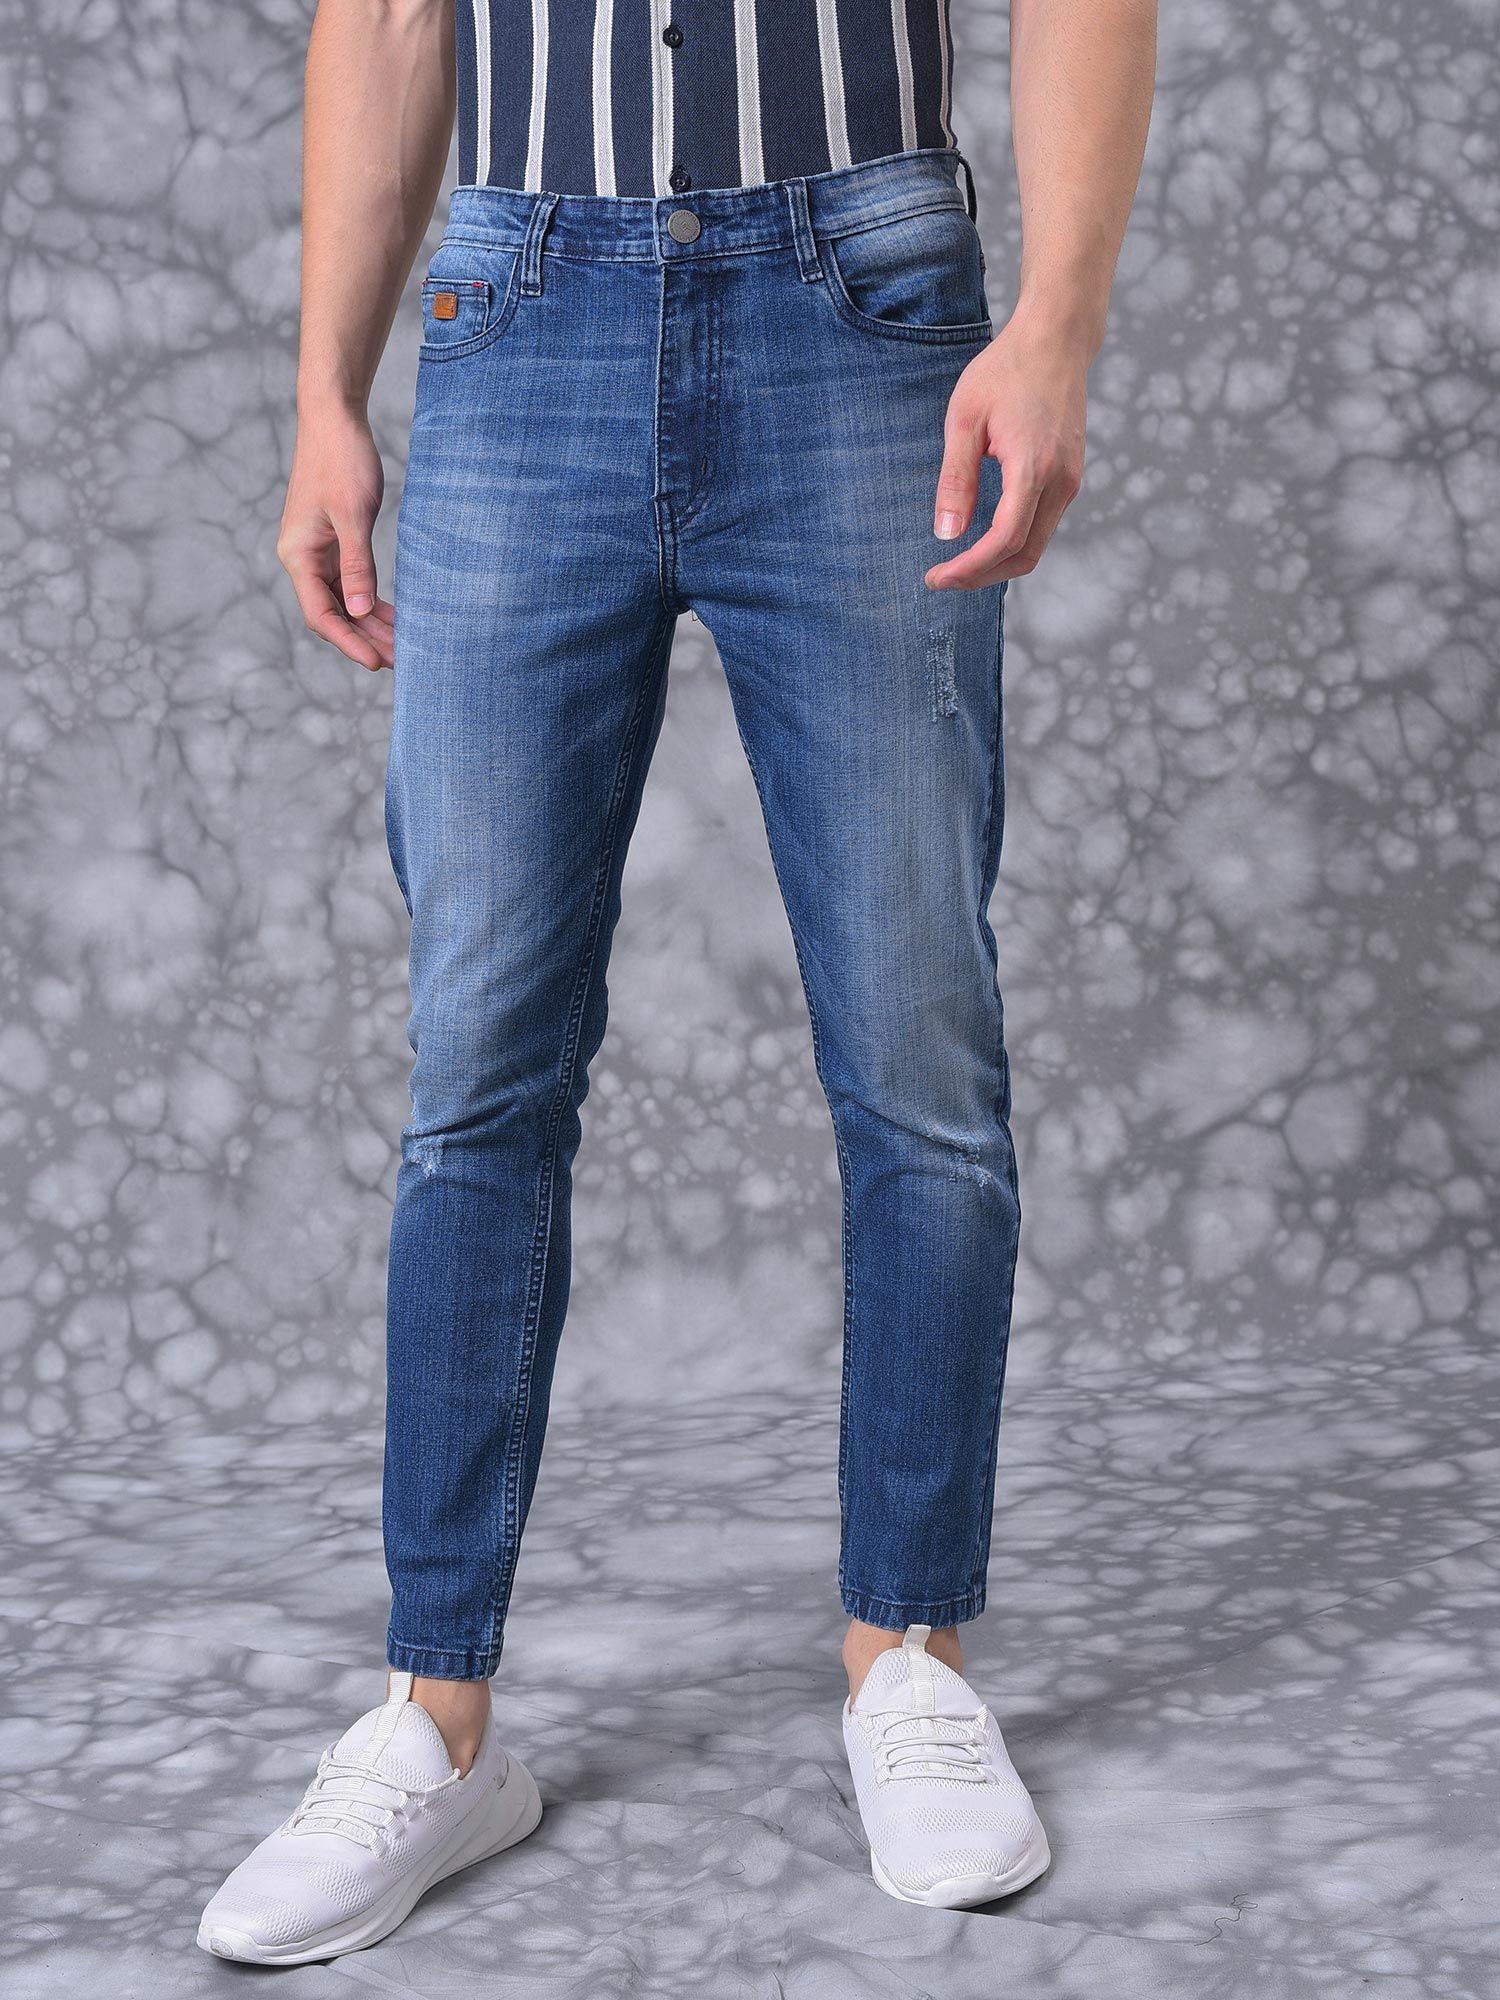 men solid stylish casual denim jeans